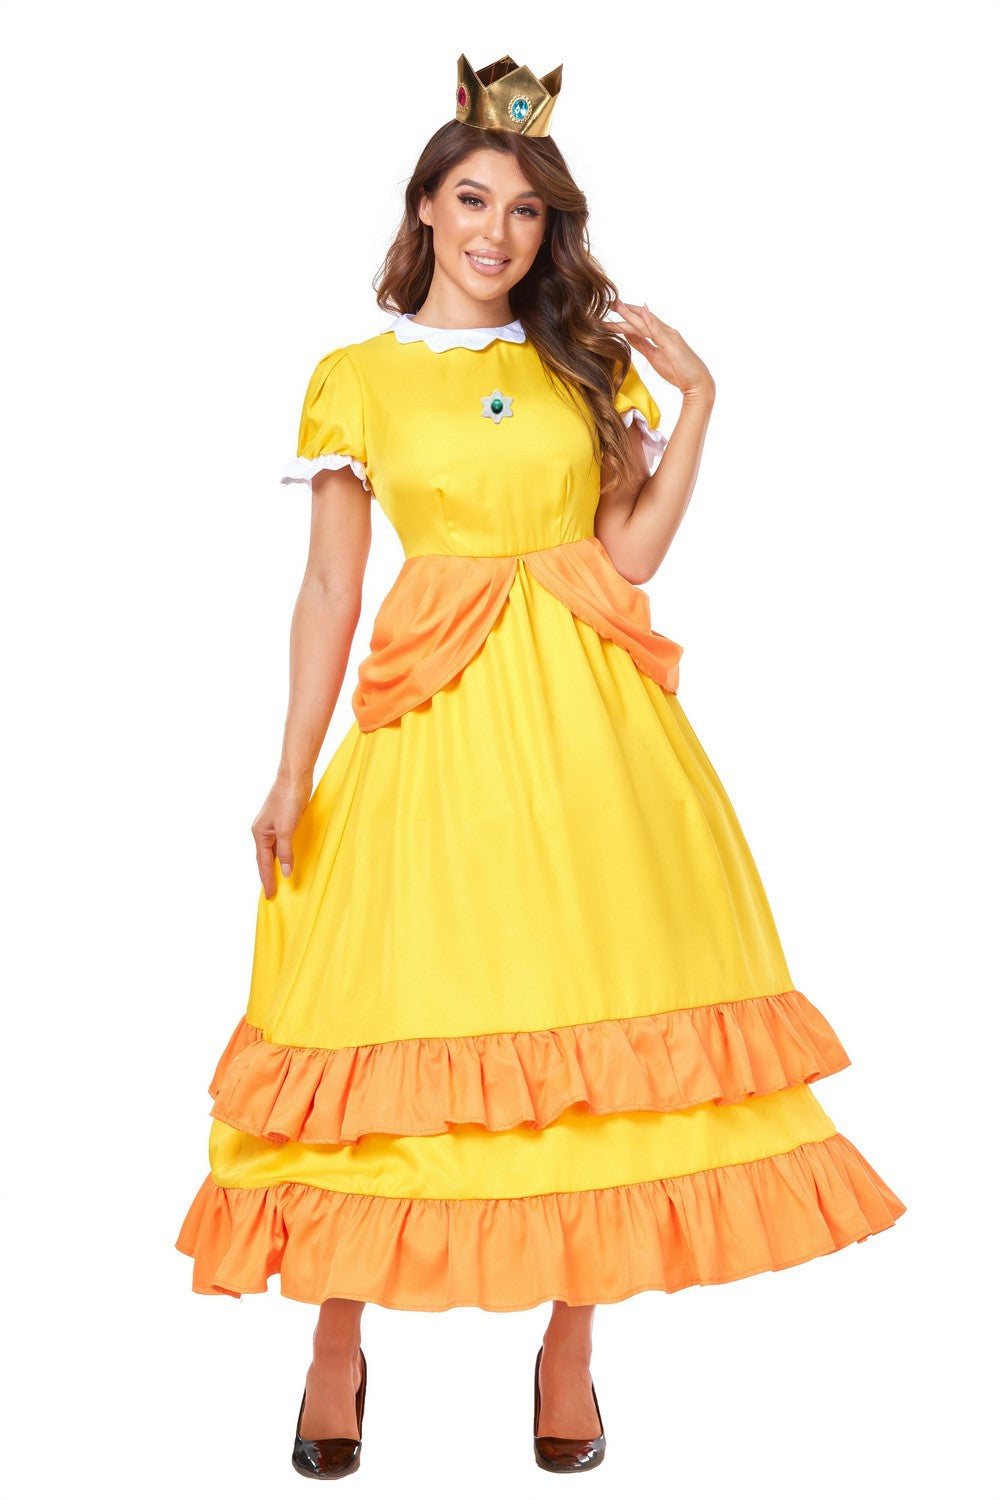 Princess Daisy Dress Costume for Adult